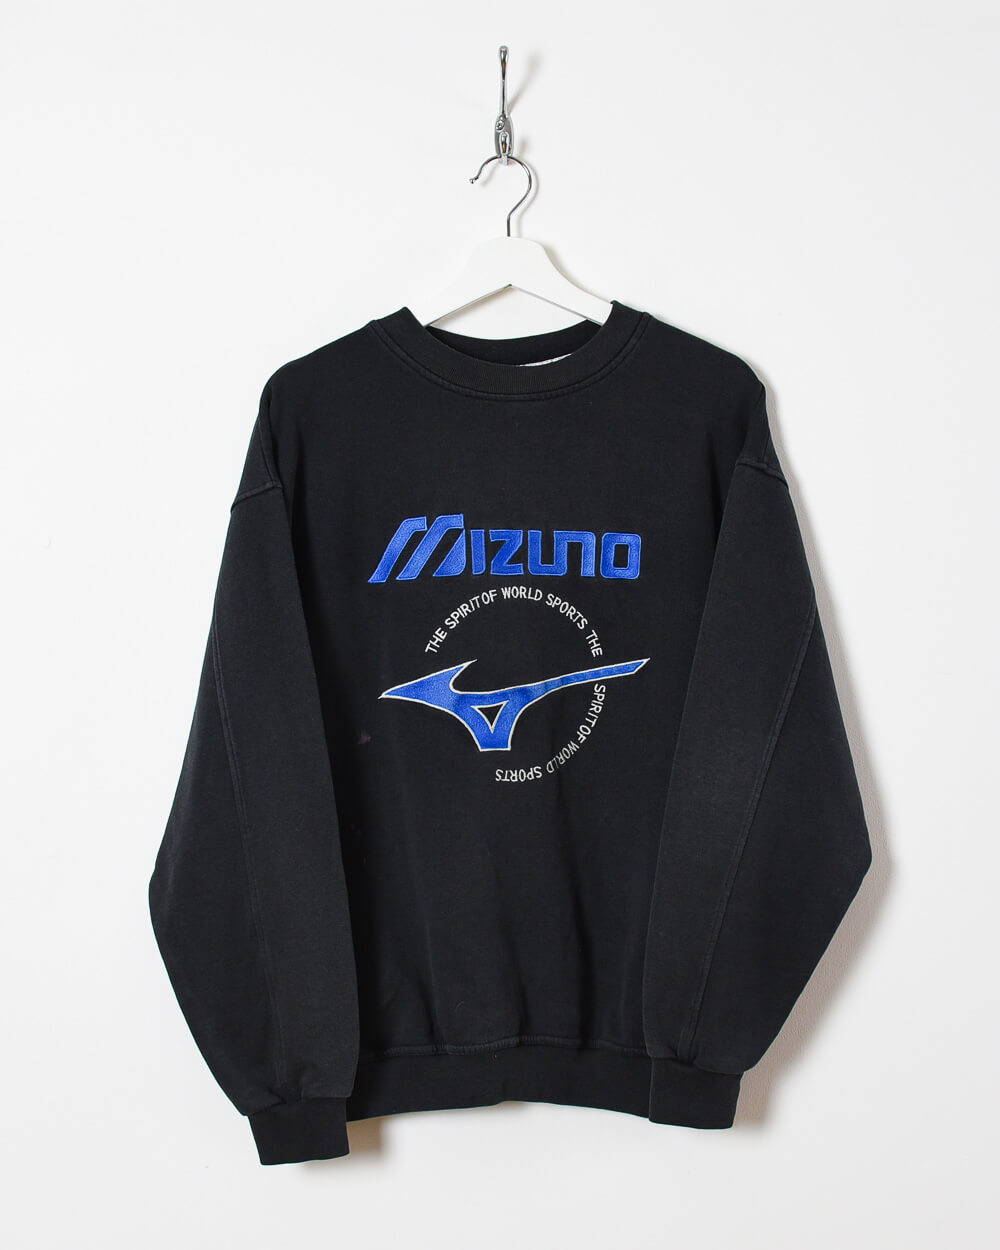 Mizuno Sweatshirt - Medium - Domno Vintage 90s, 80s, 00s Retro and Vintage Clothing 